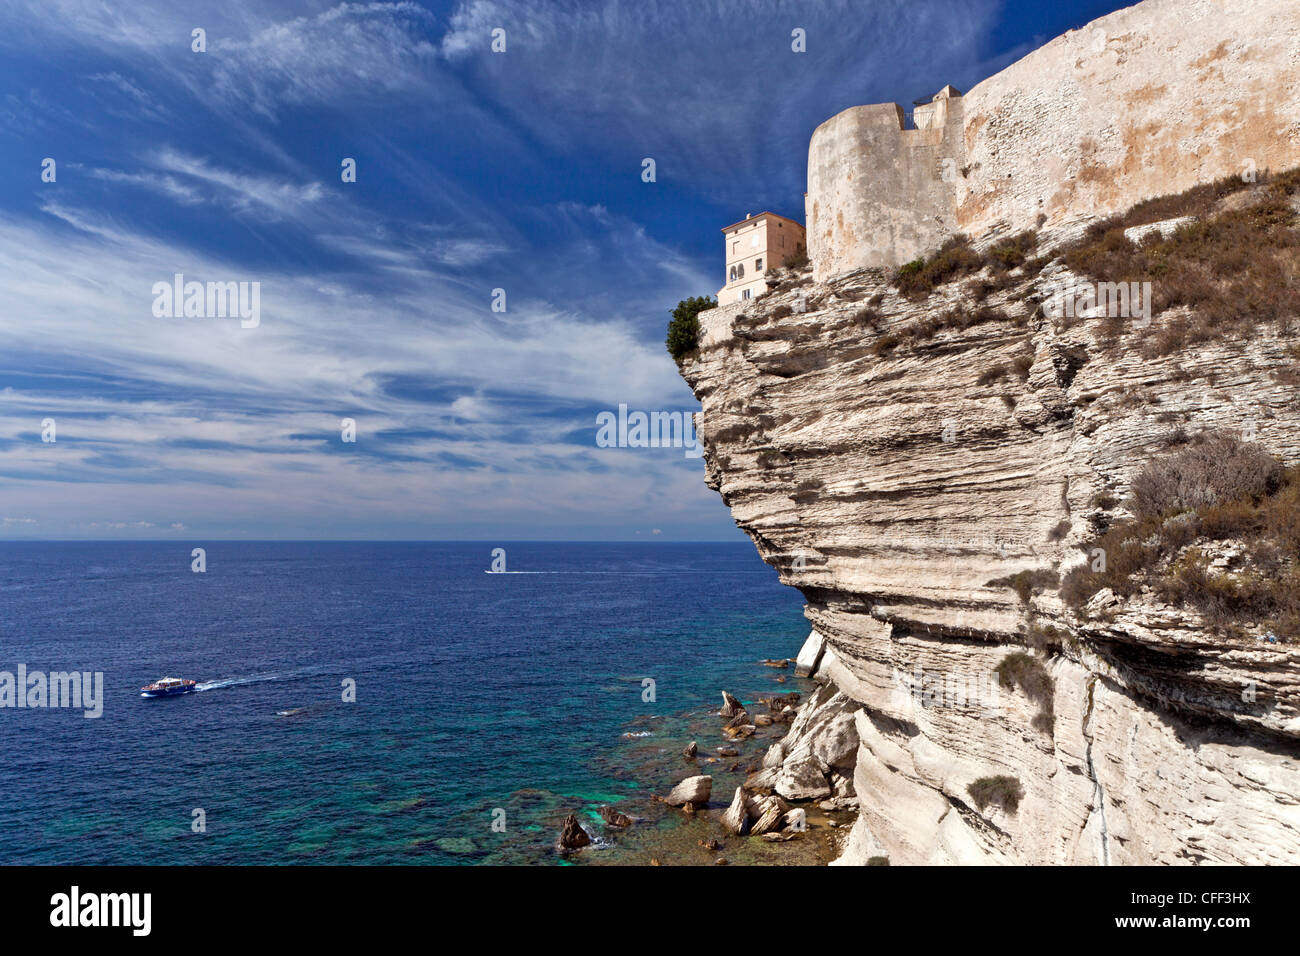 Steep coast with a house, Bonifacio, Oberstadt uand the Mediterranean Sea, Corsica, France Stock Photo